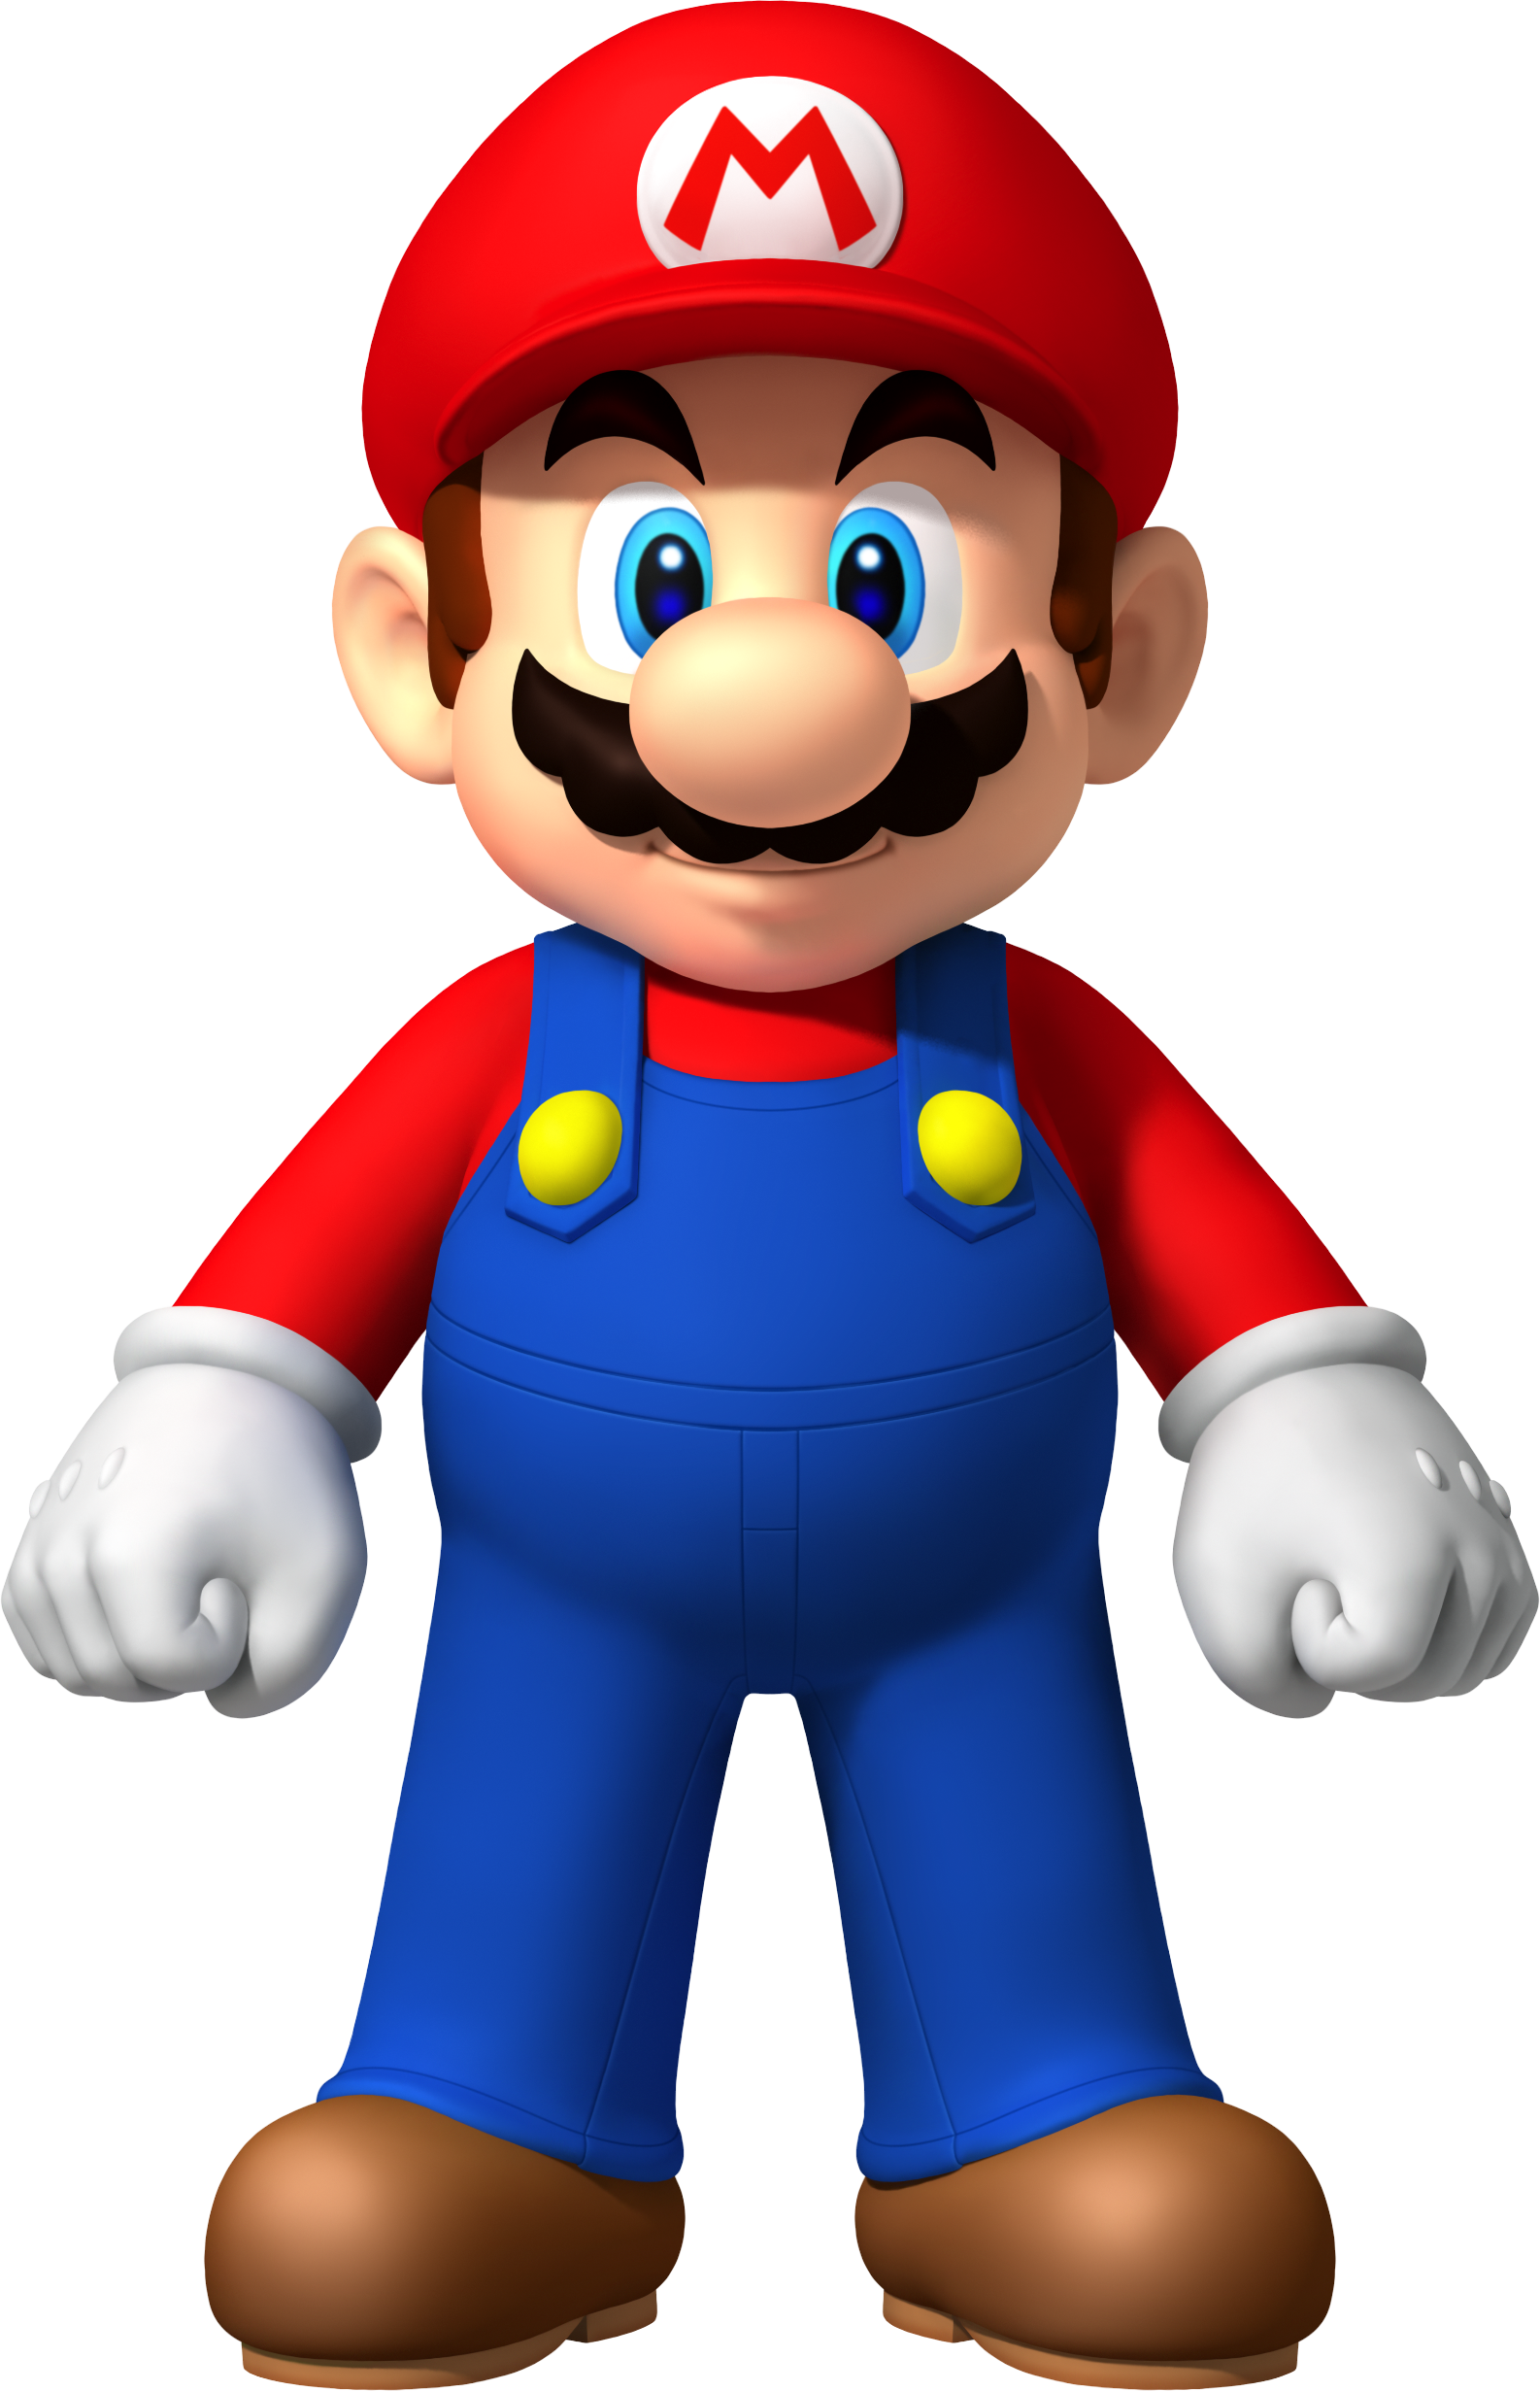 Mario bilder kostenlos